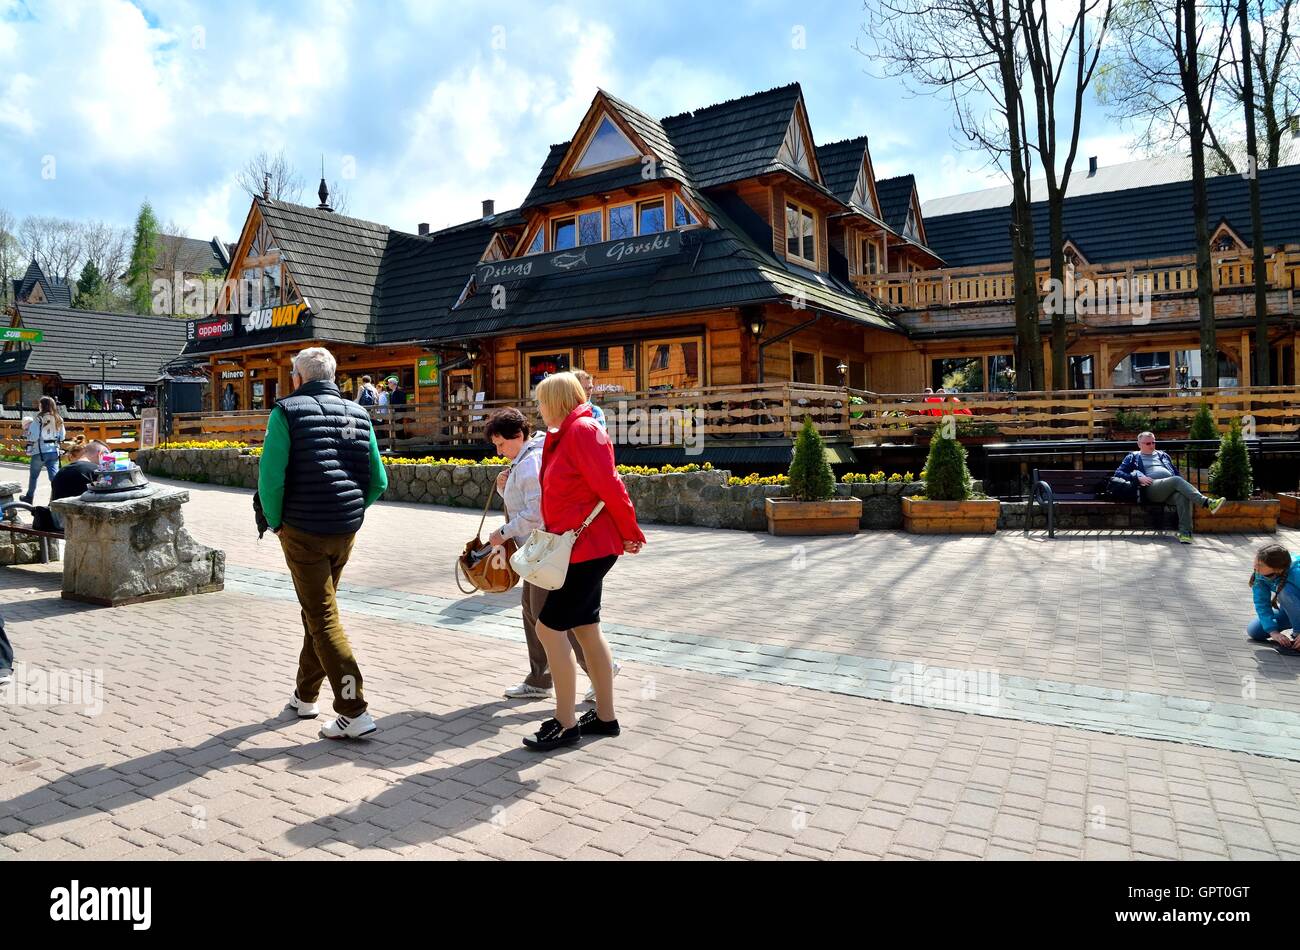 ZAKOPANE, Polonia - 8 de mayo de 2016: Los turistas en una popular calle Krupowki en Zakopane, Polonia. Foto de stock